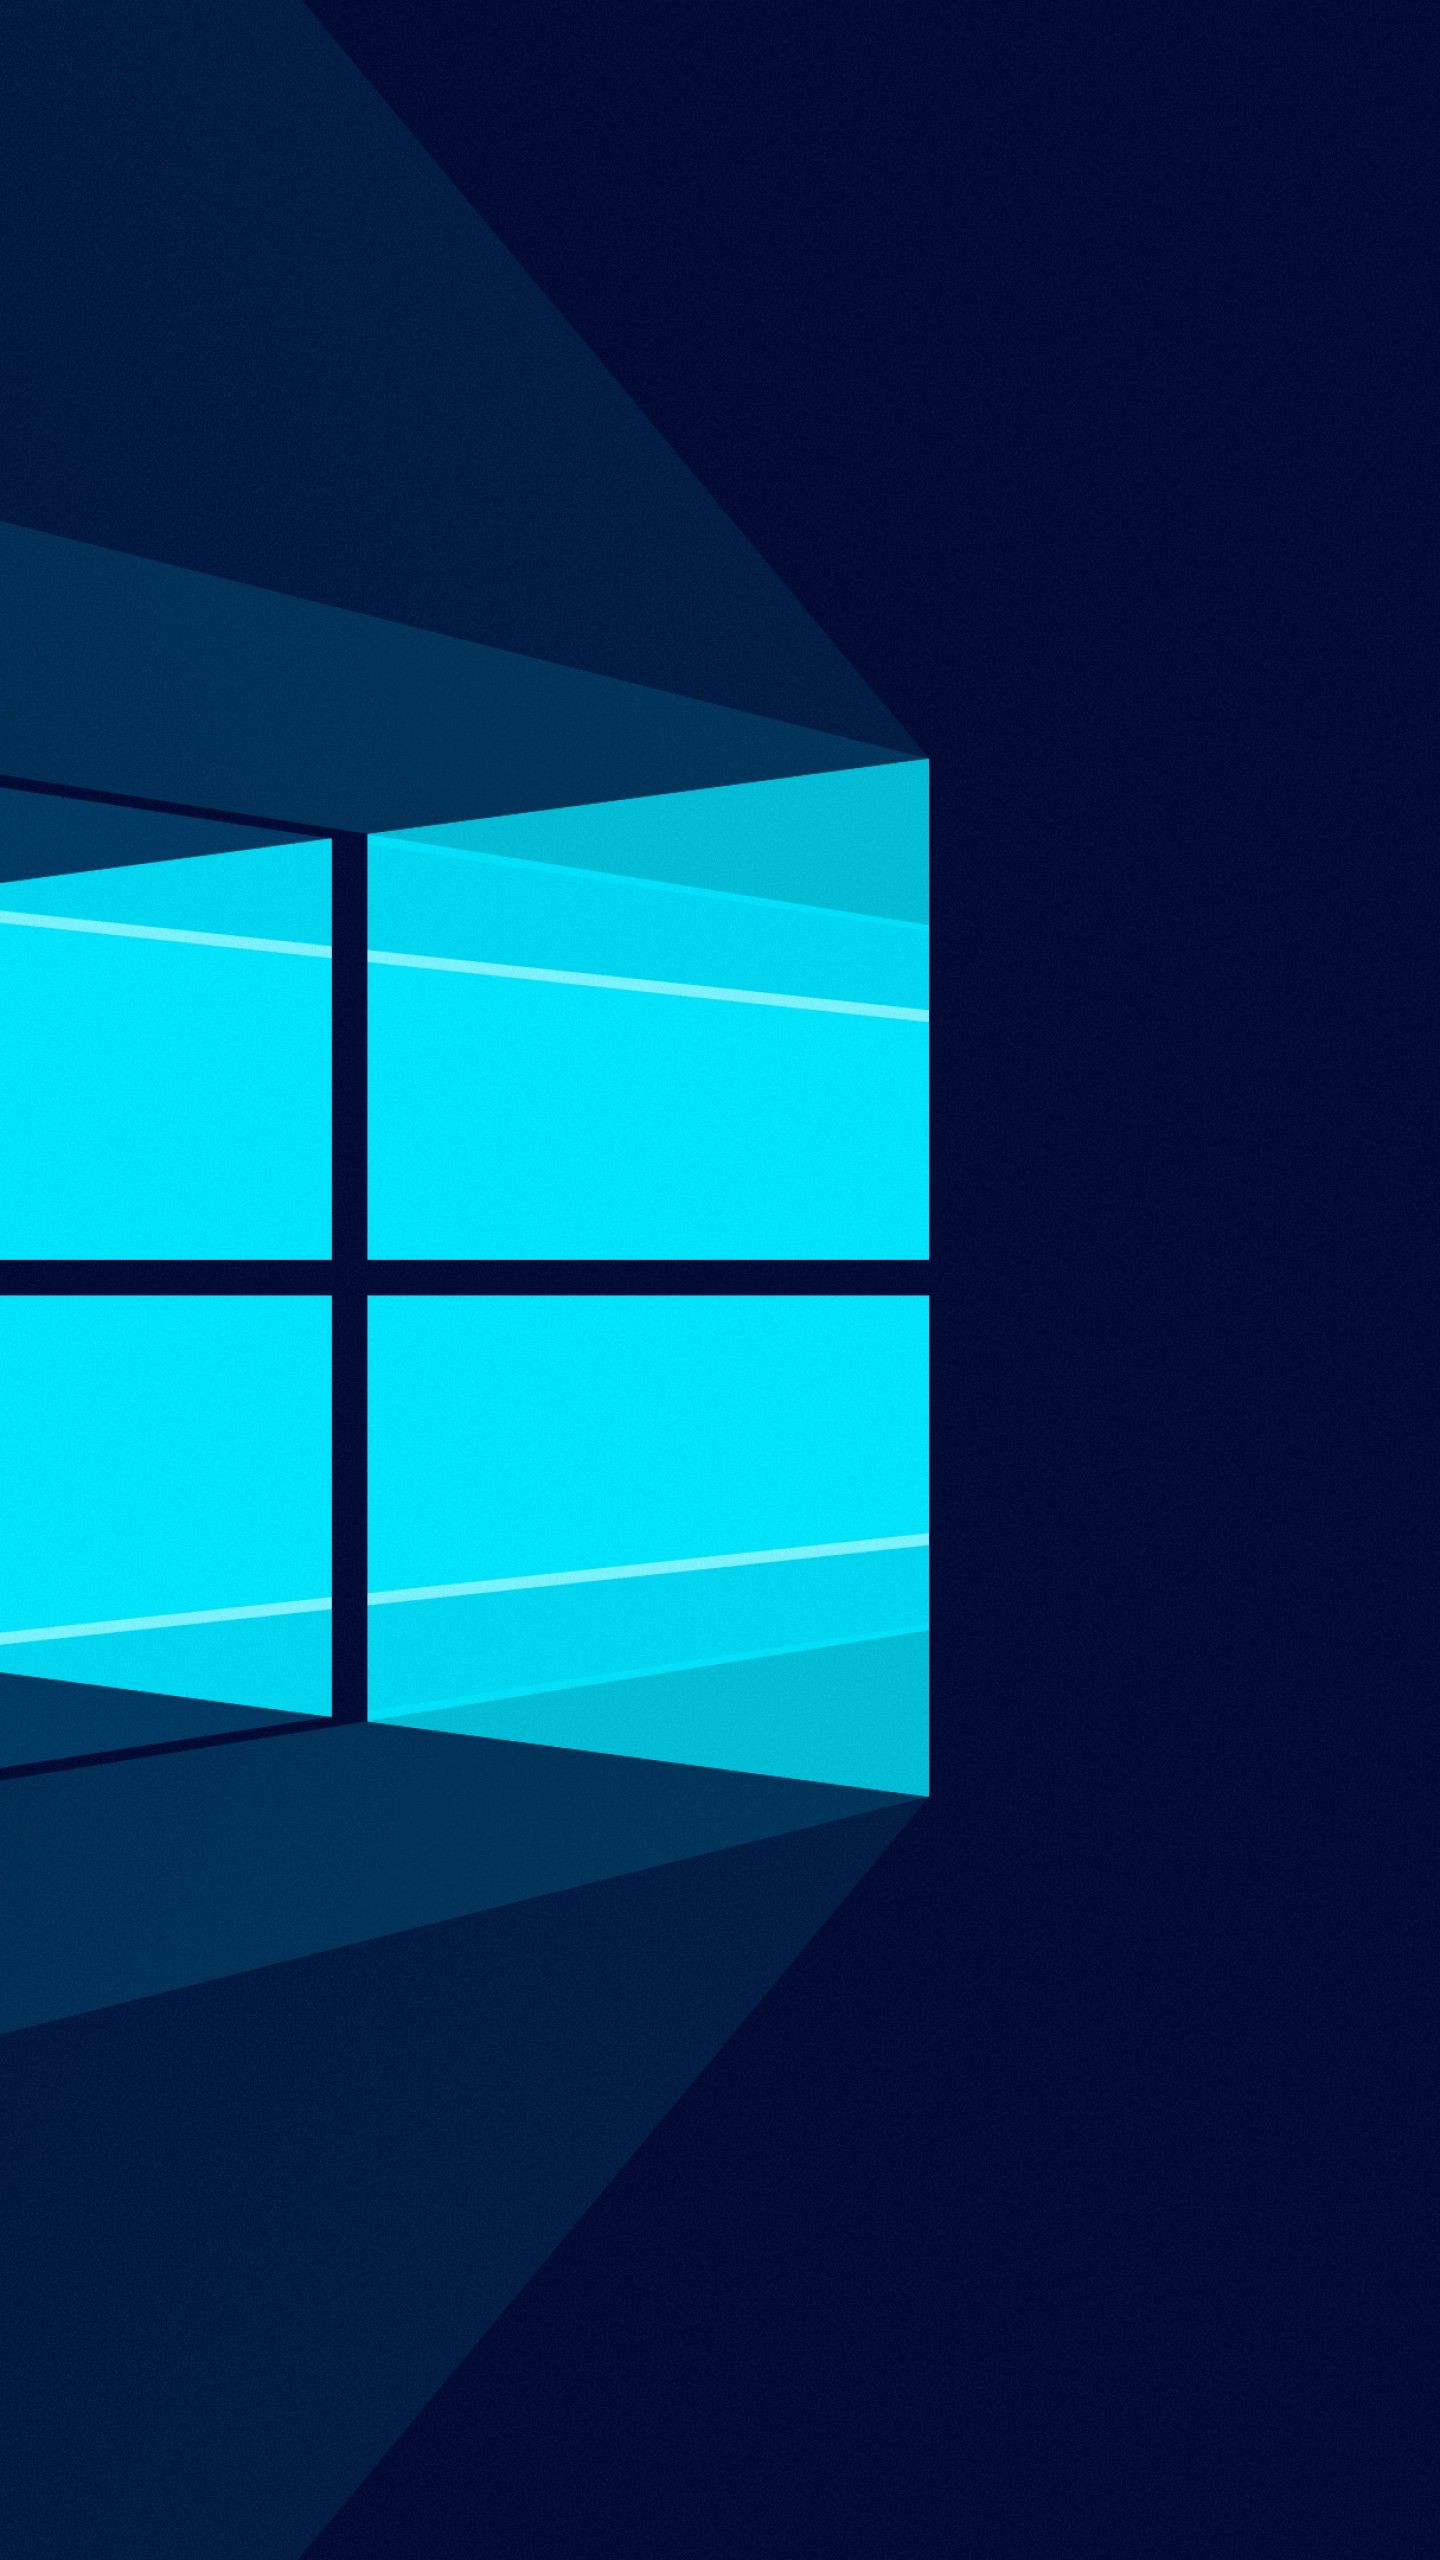 Windows 10 4K Wallpaper, Microsoft Windows, Minimalist, Blue background, Technology